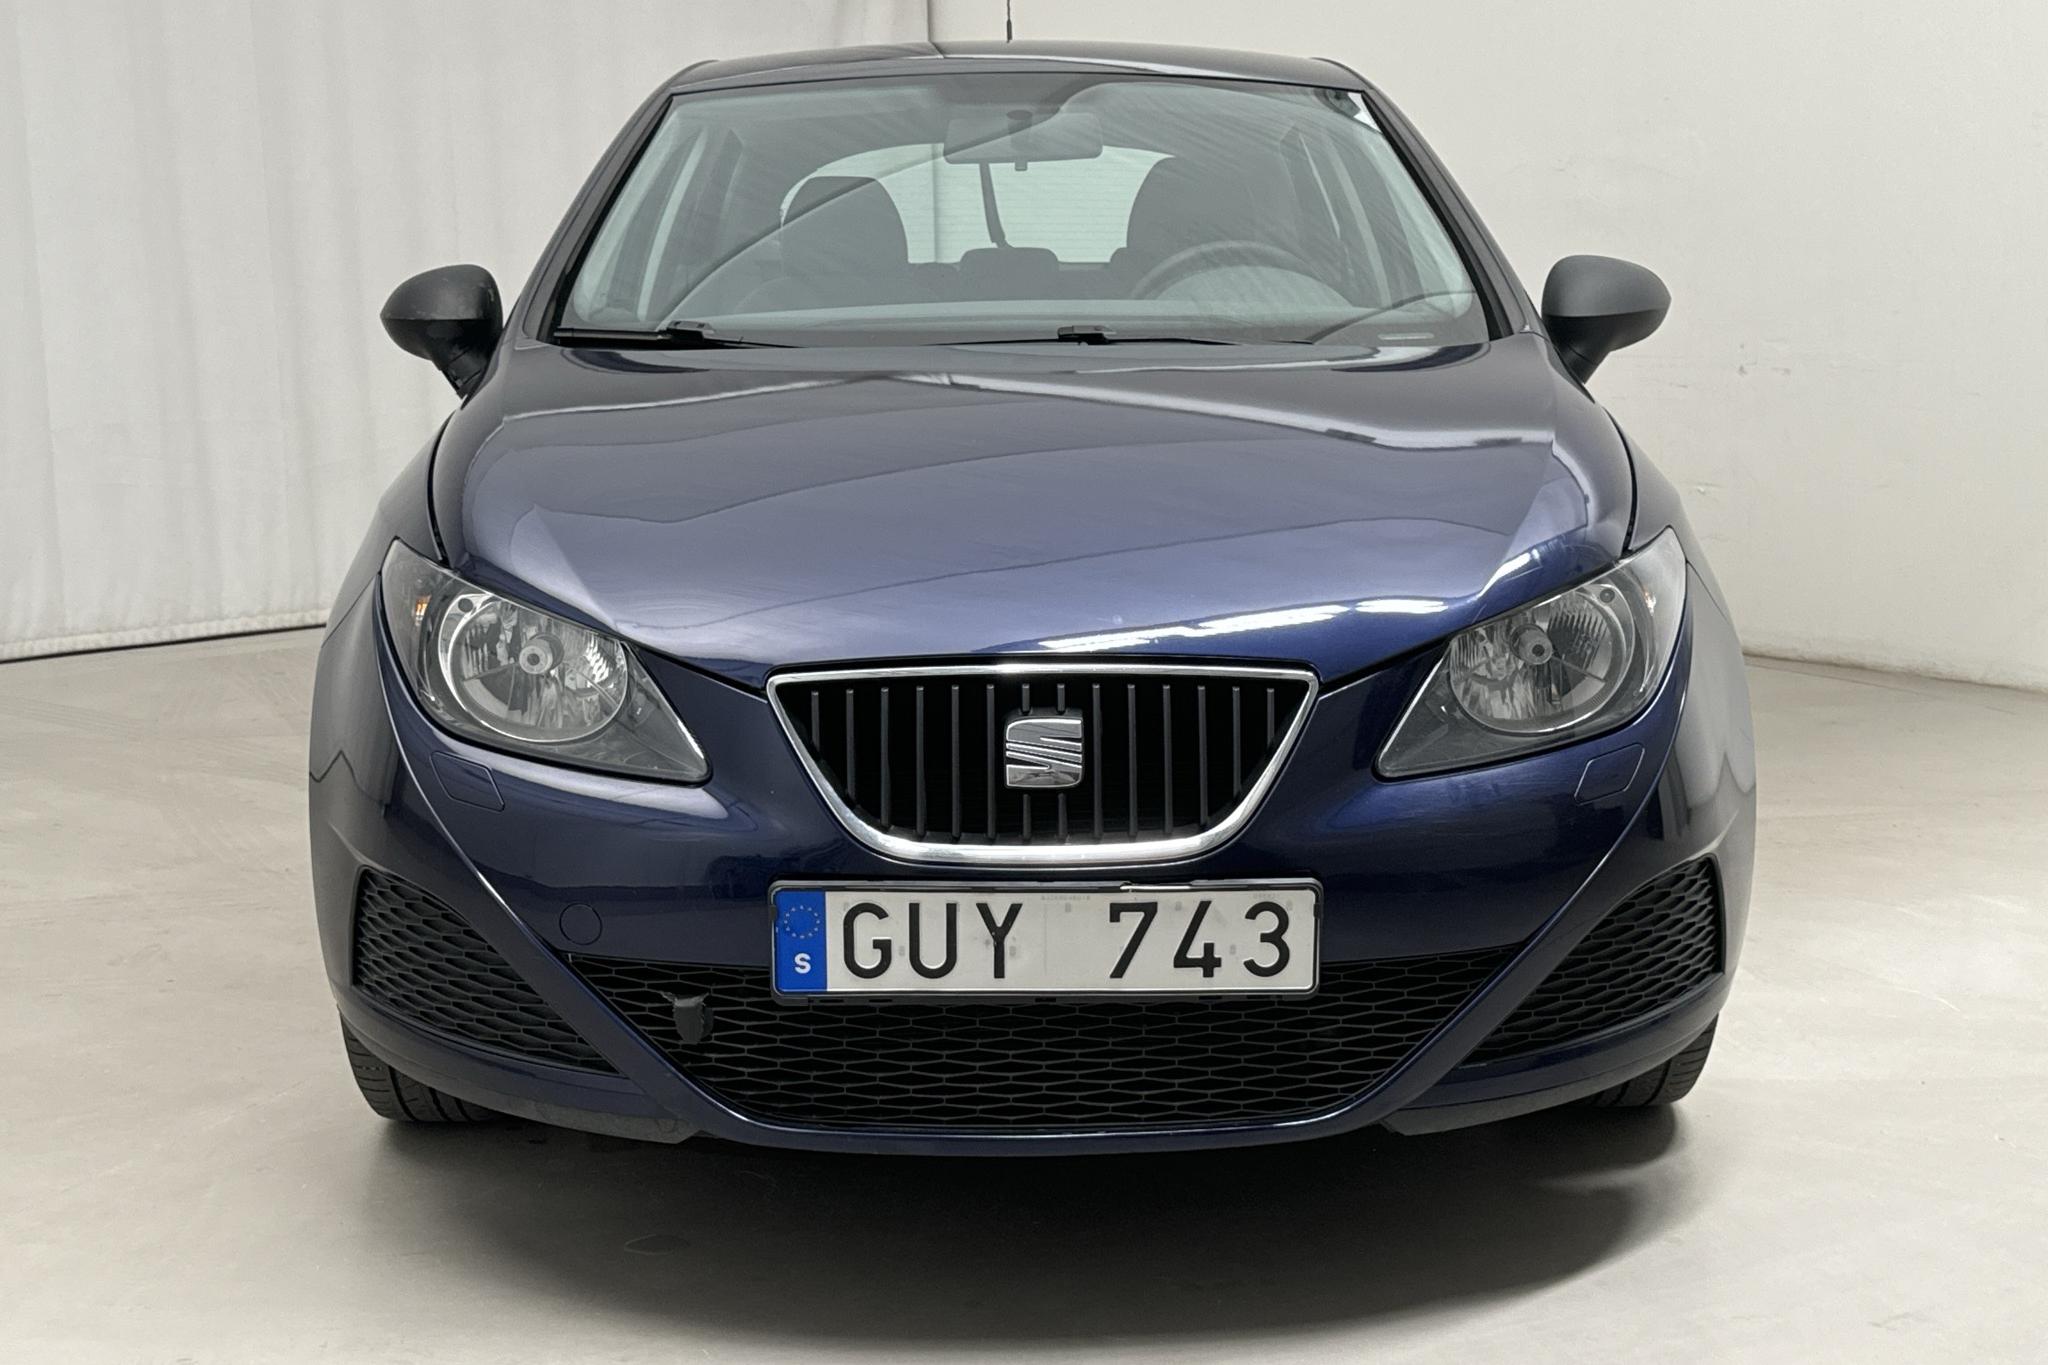 Seat Ibiza 1.4 (85hk) - 151 440 km - Manual - Dark Blue - 2010